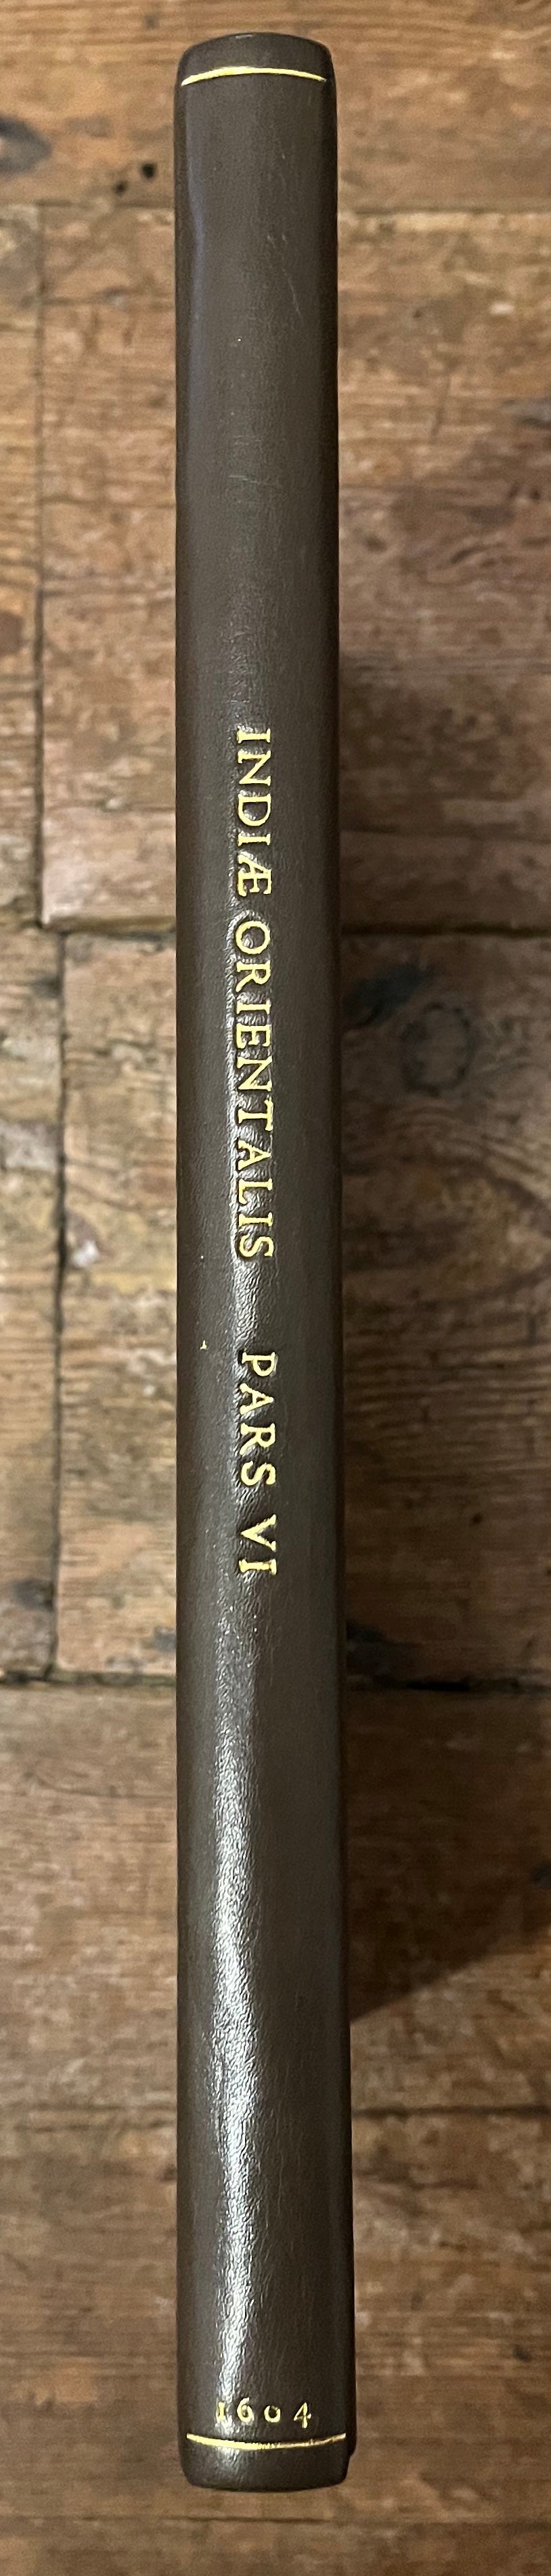 Indiae Orientalis pars VI. : "Veram et historicam descriptionem auriferi regni Guineae - Pieter de Marees Published by Theodore De Bry - 1604